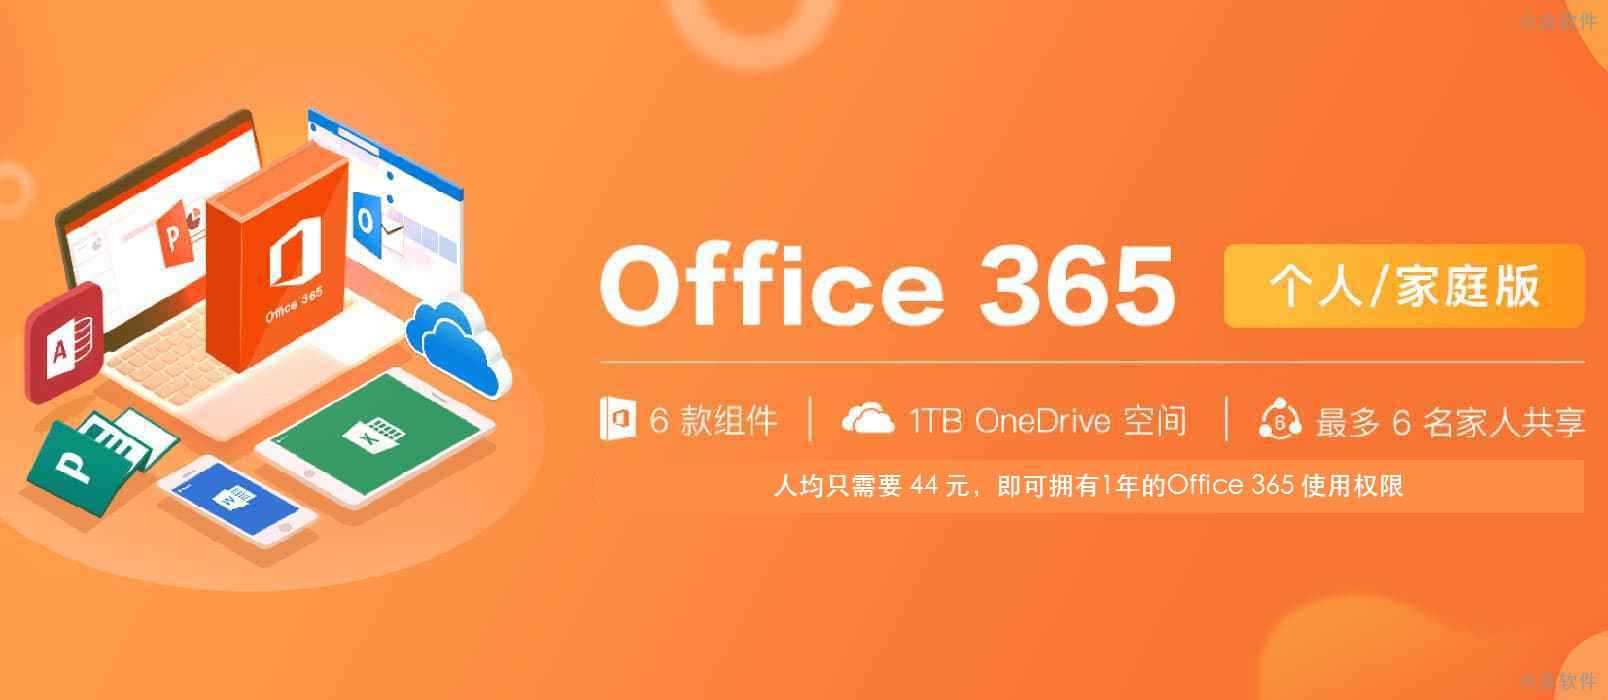 Office 365 家庭版又有优惠啦，价格探底 1